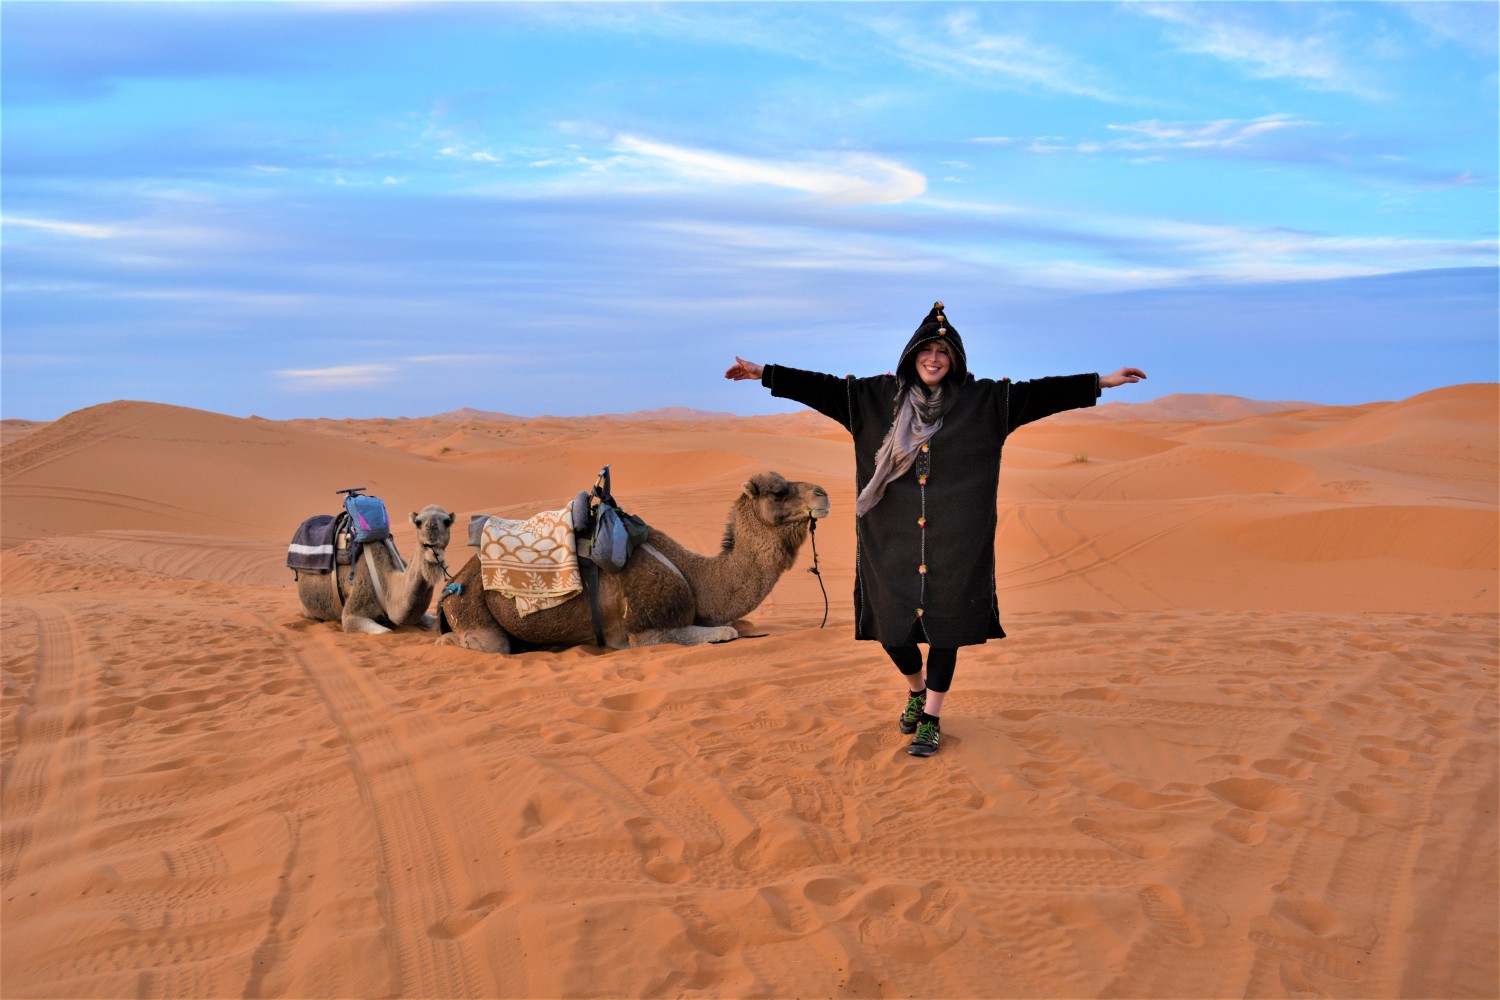 désert du sahara au maroc